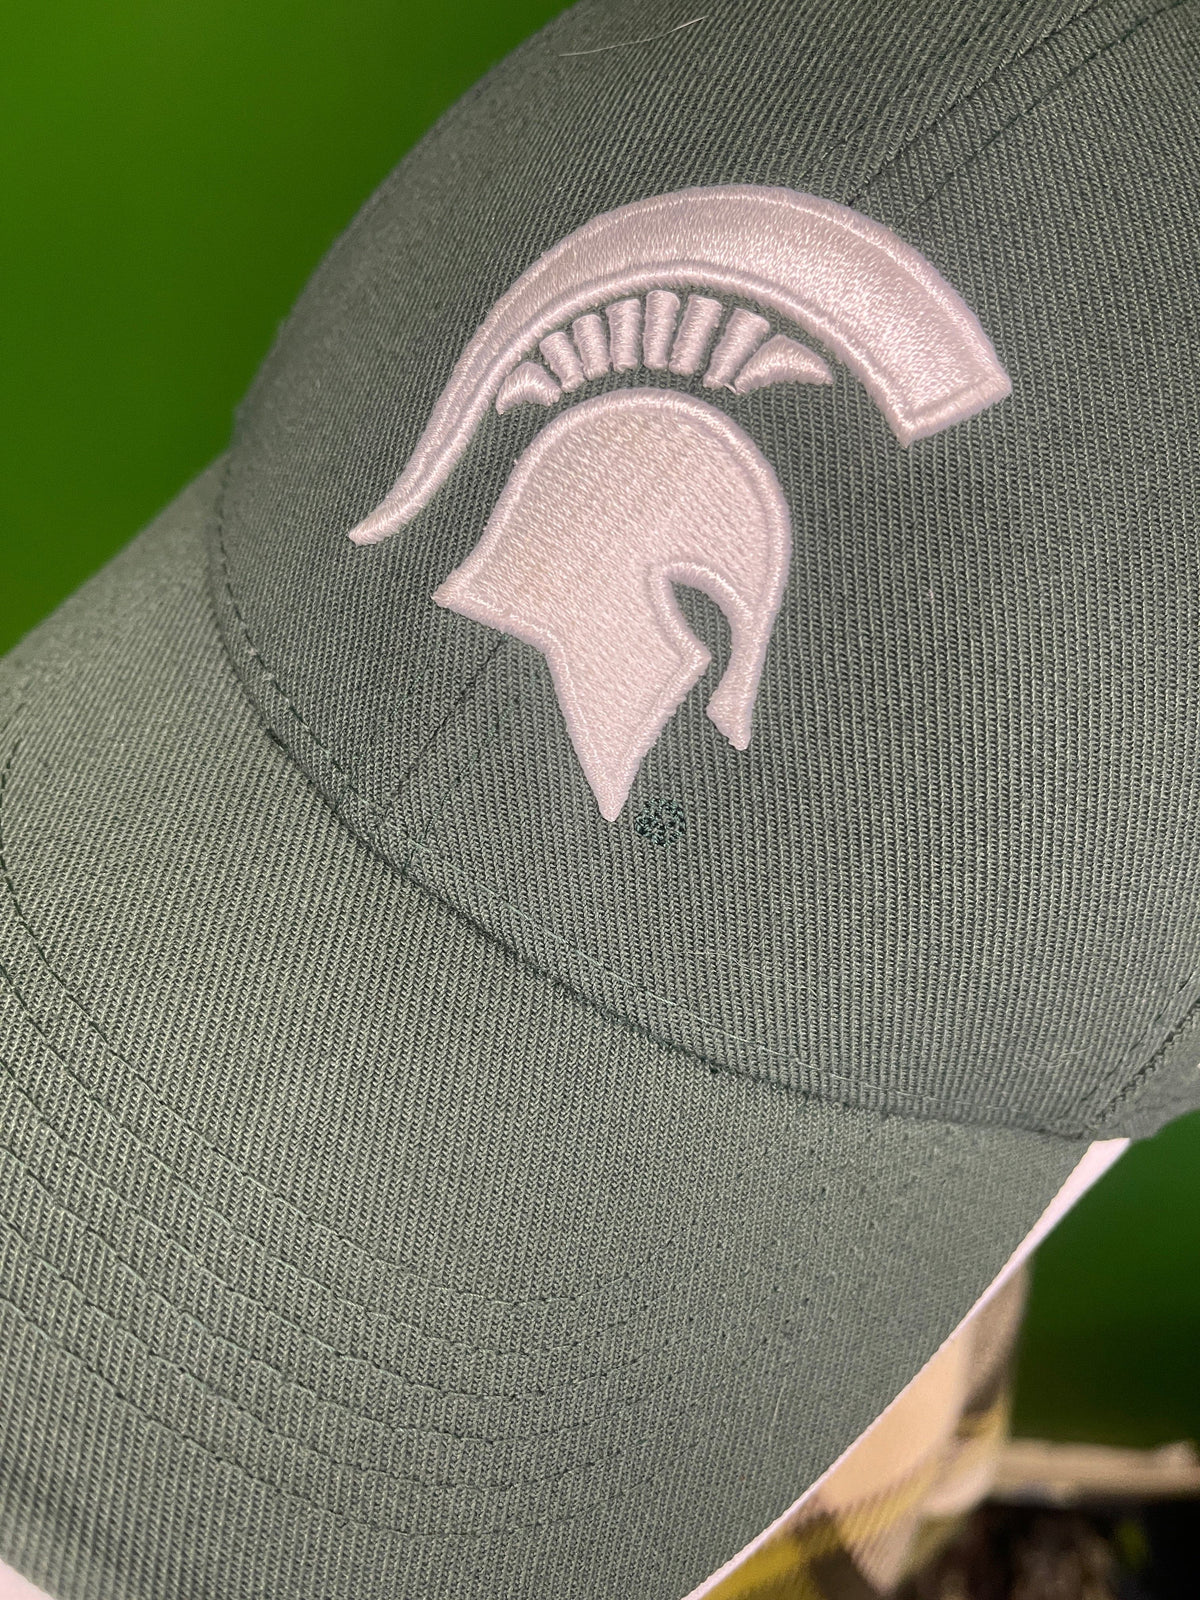 NCAA Michigan State Spartans Dri-Fit Strapback Hat/Cap OSFM